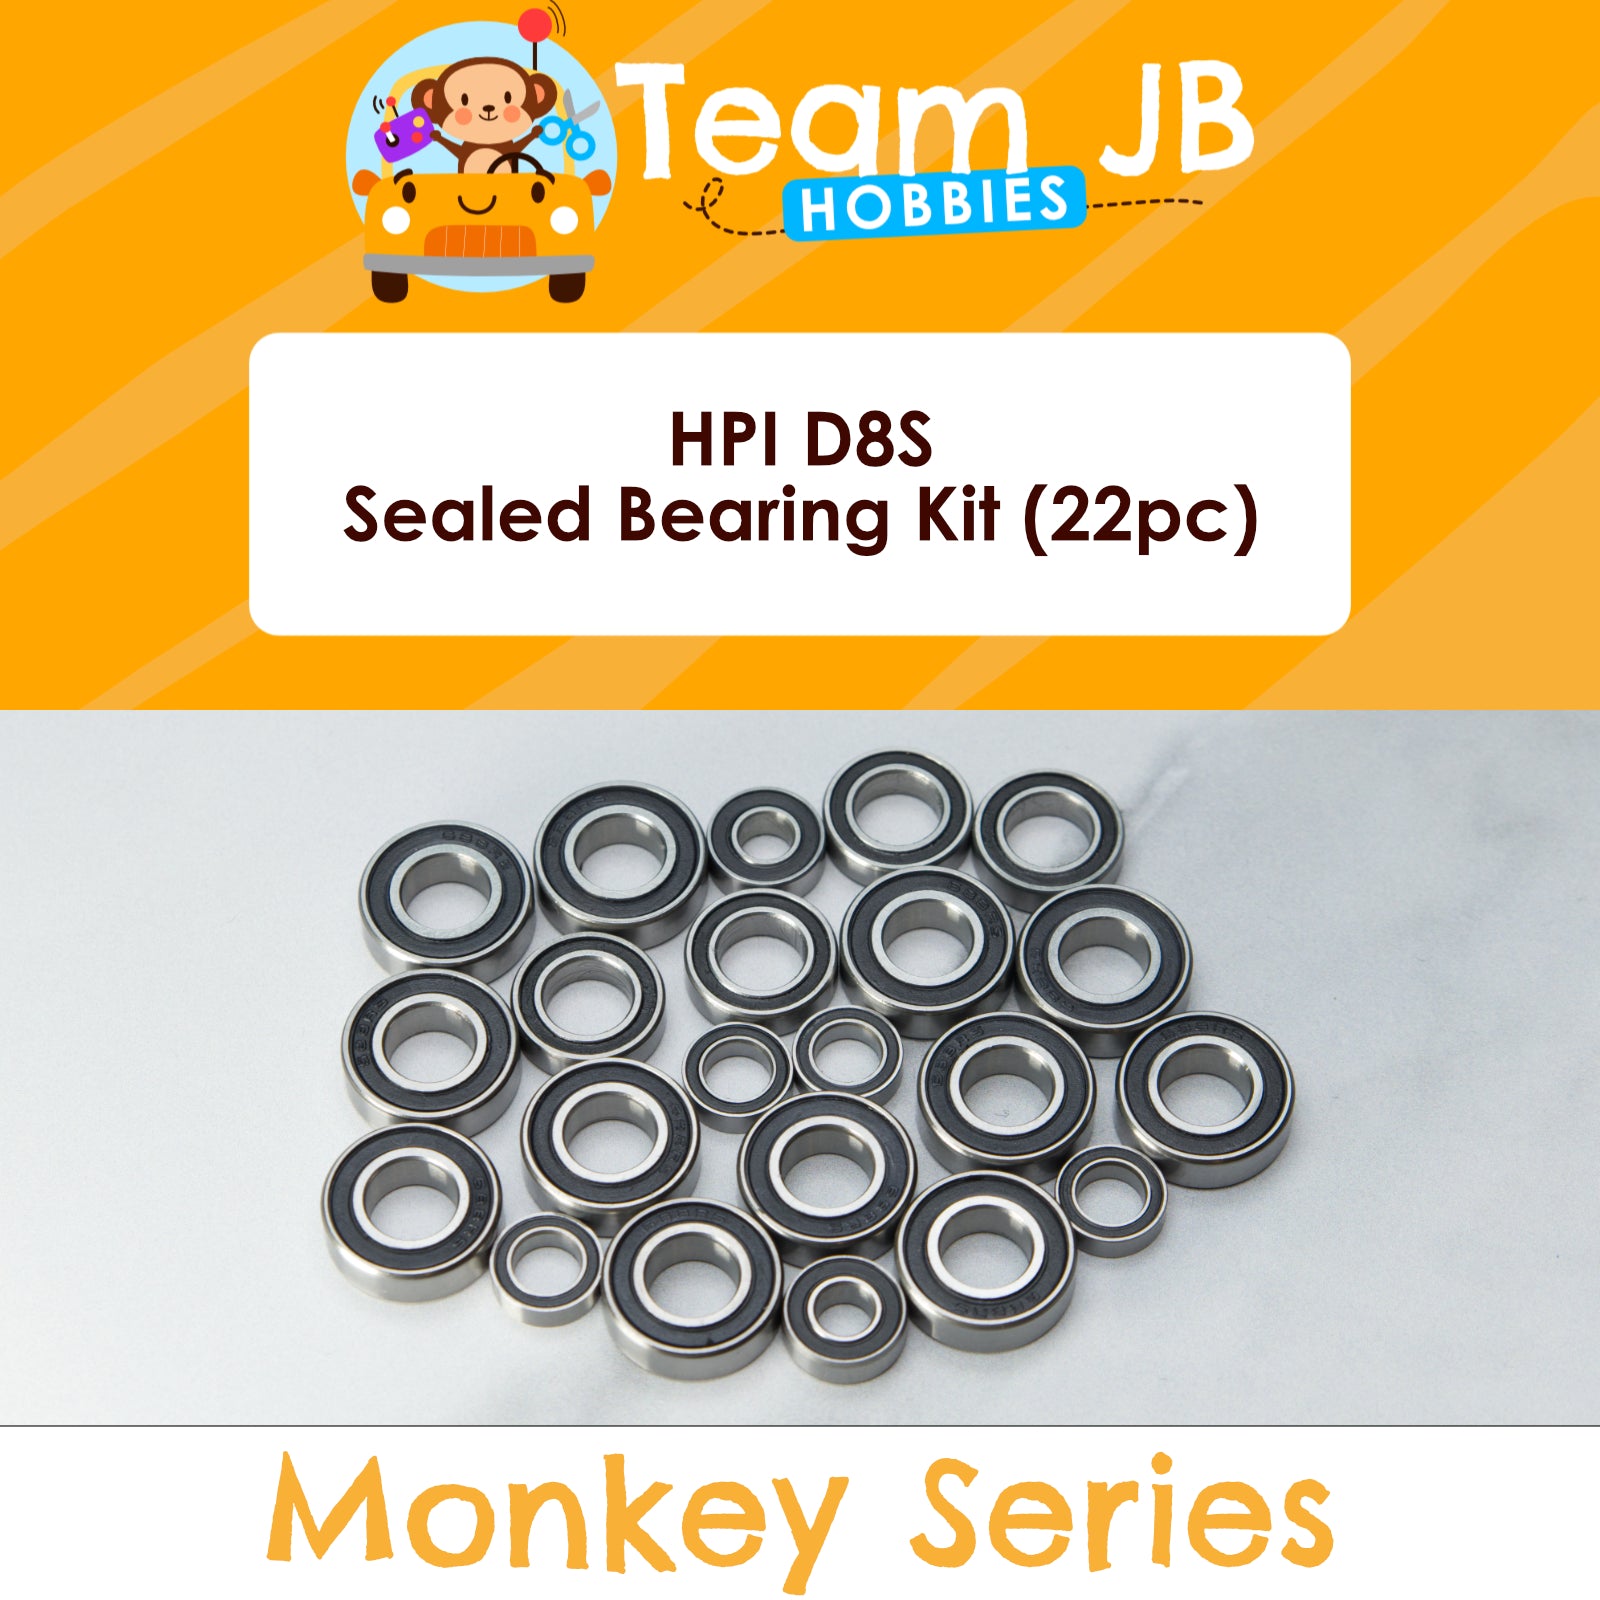 HPI D8S - Sealed Bearing Kit